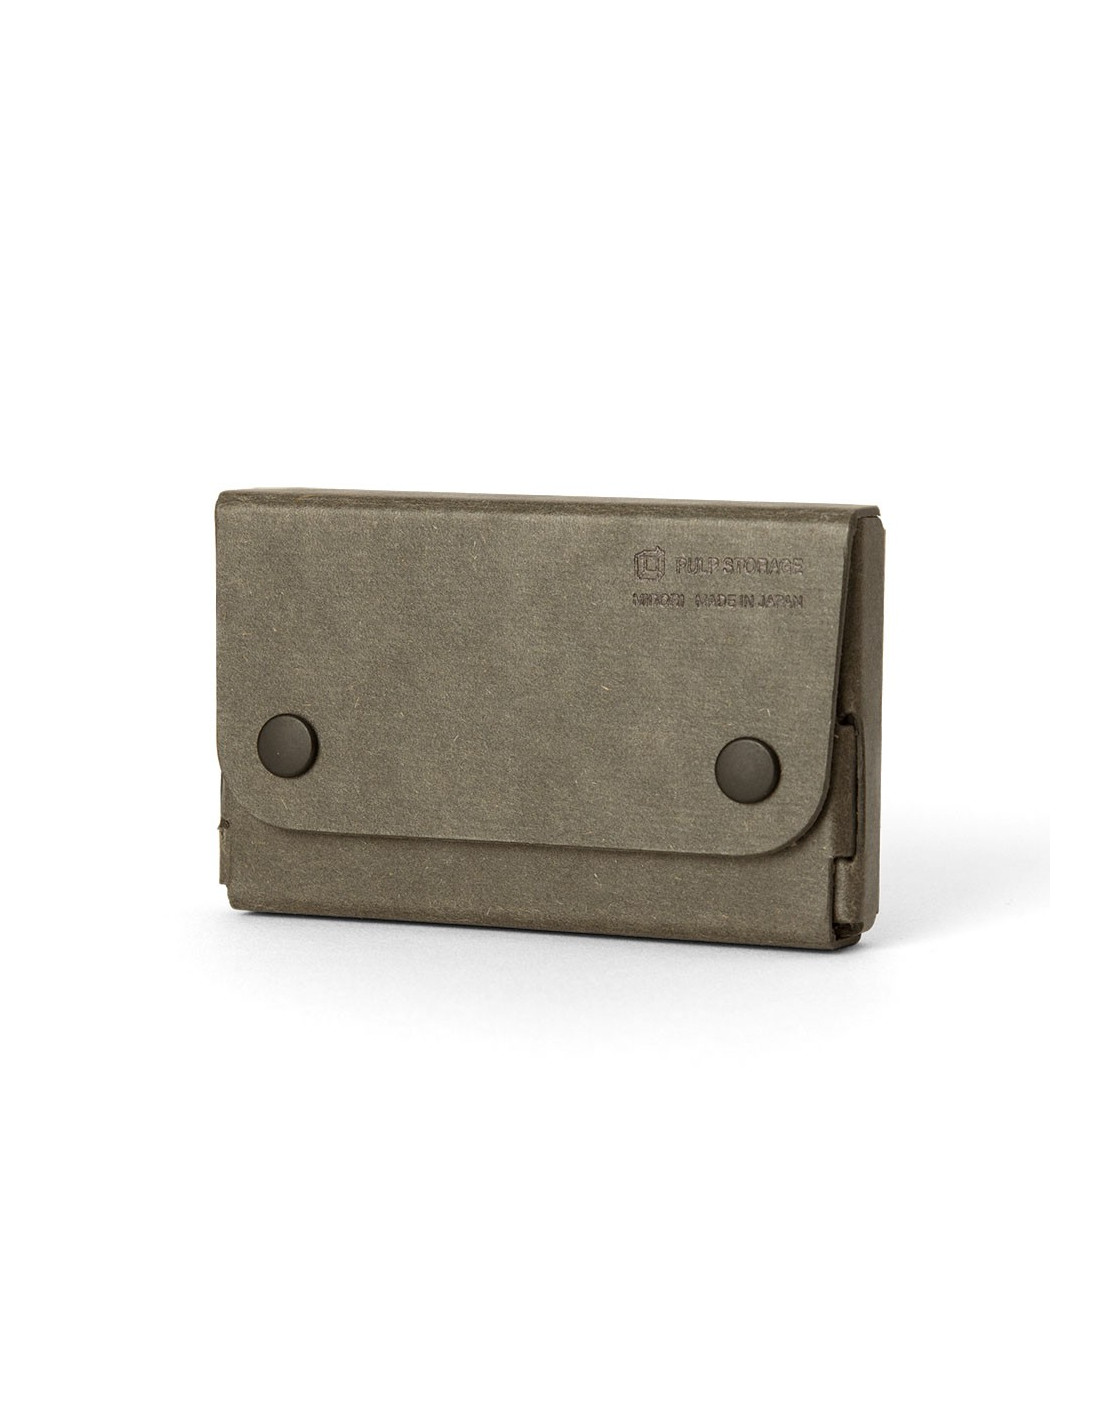 PASCO Card Holder - Black - Pulp Storage Midori